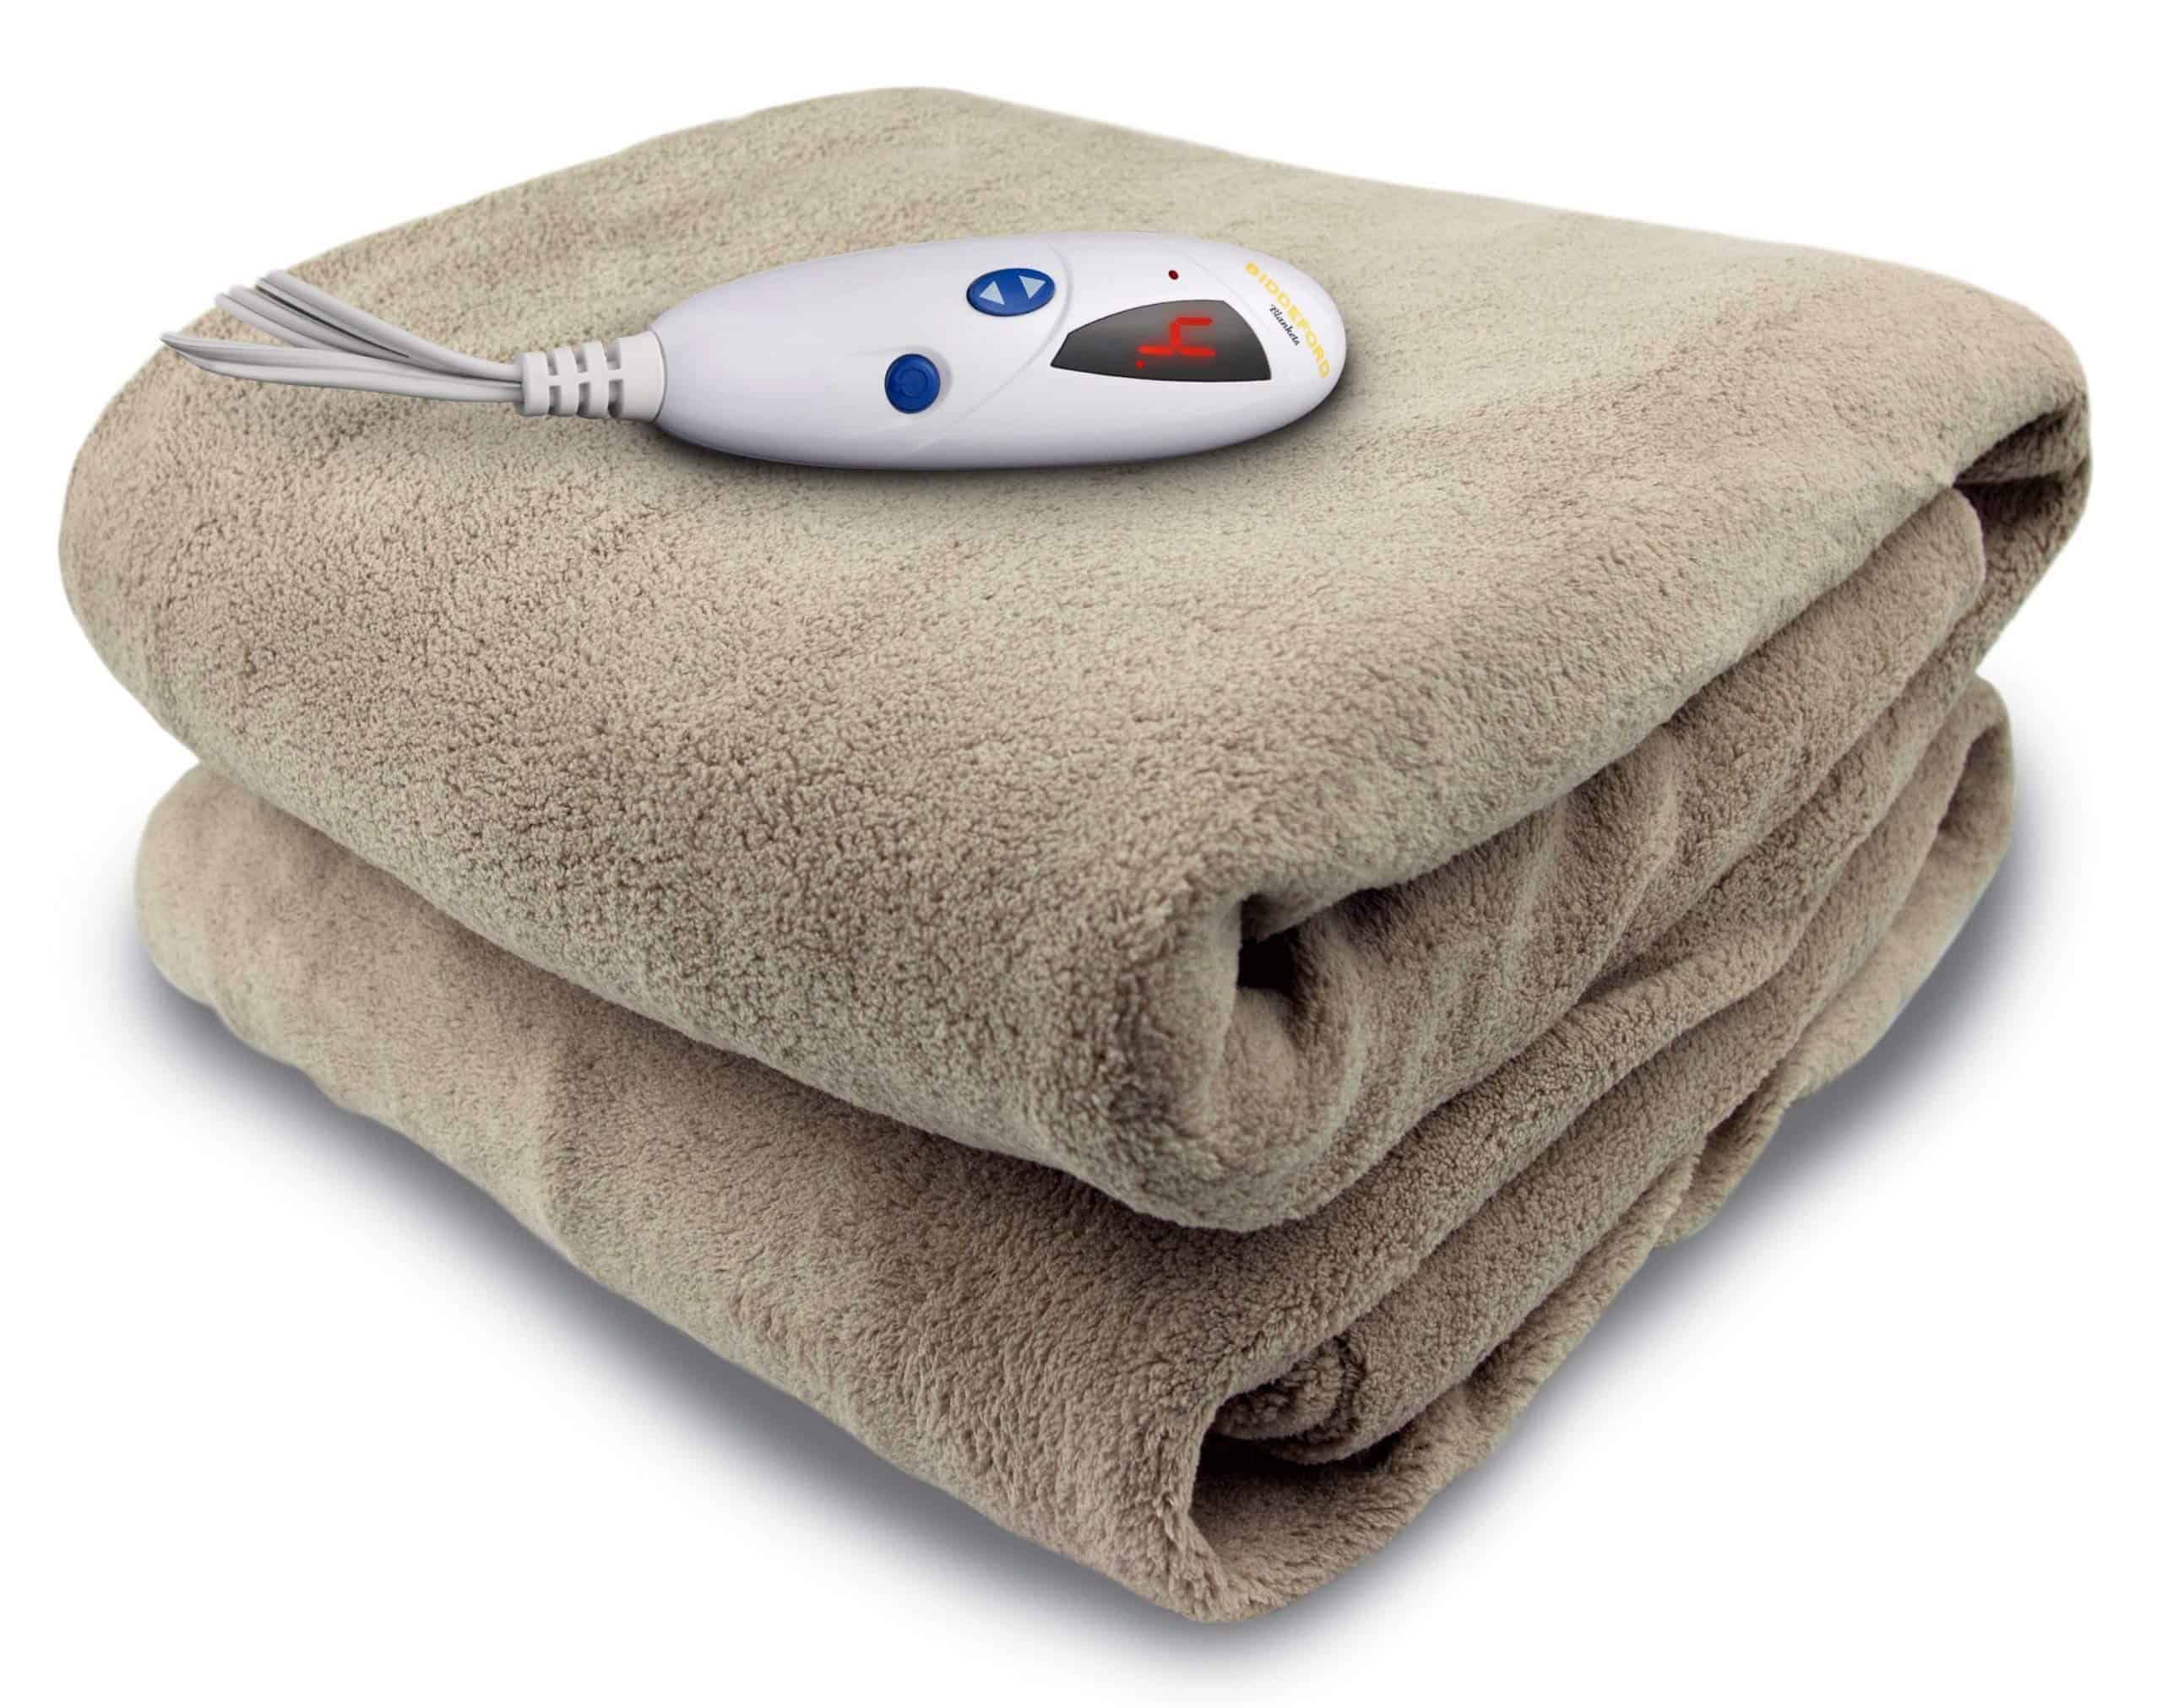 biddeford blankets heated mattress pad stopped working